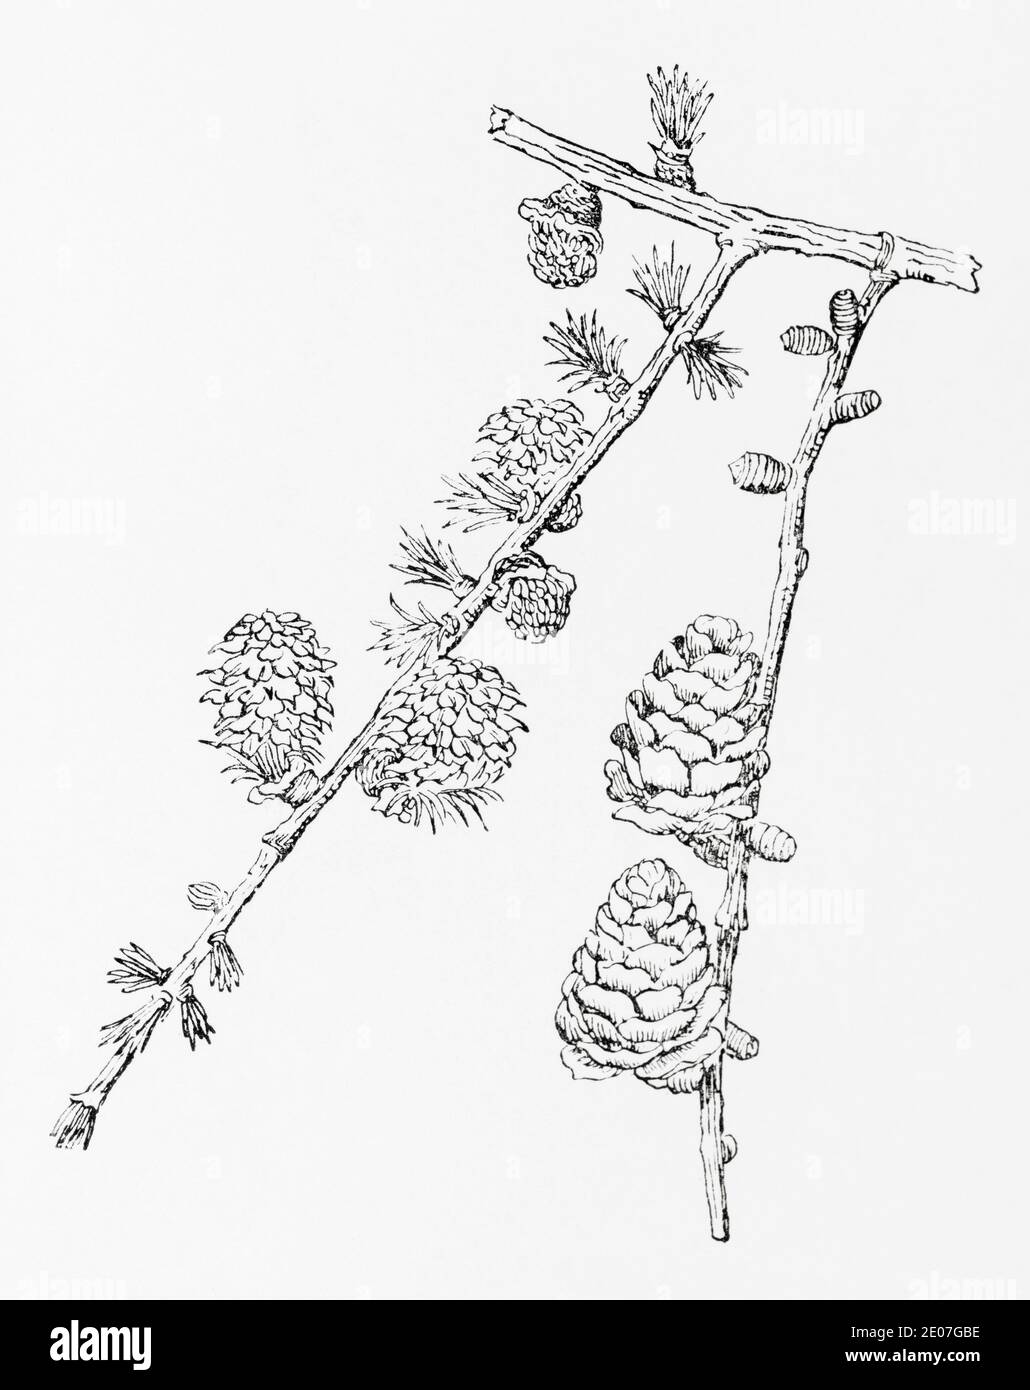 Old botanical illustration engraving of Larch, European Larch / Larix decidua, Larix europaea. Traditional herbal medicine plant. See Notes Stock Photo